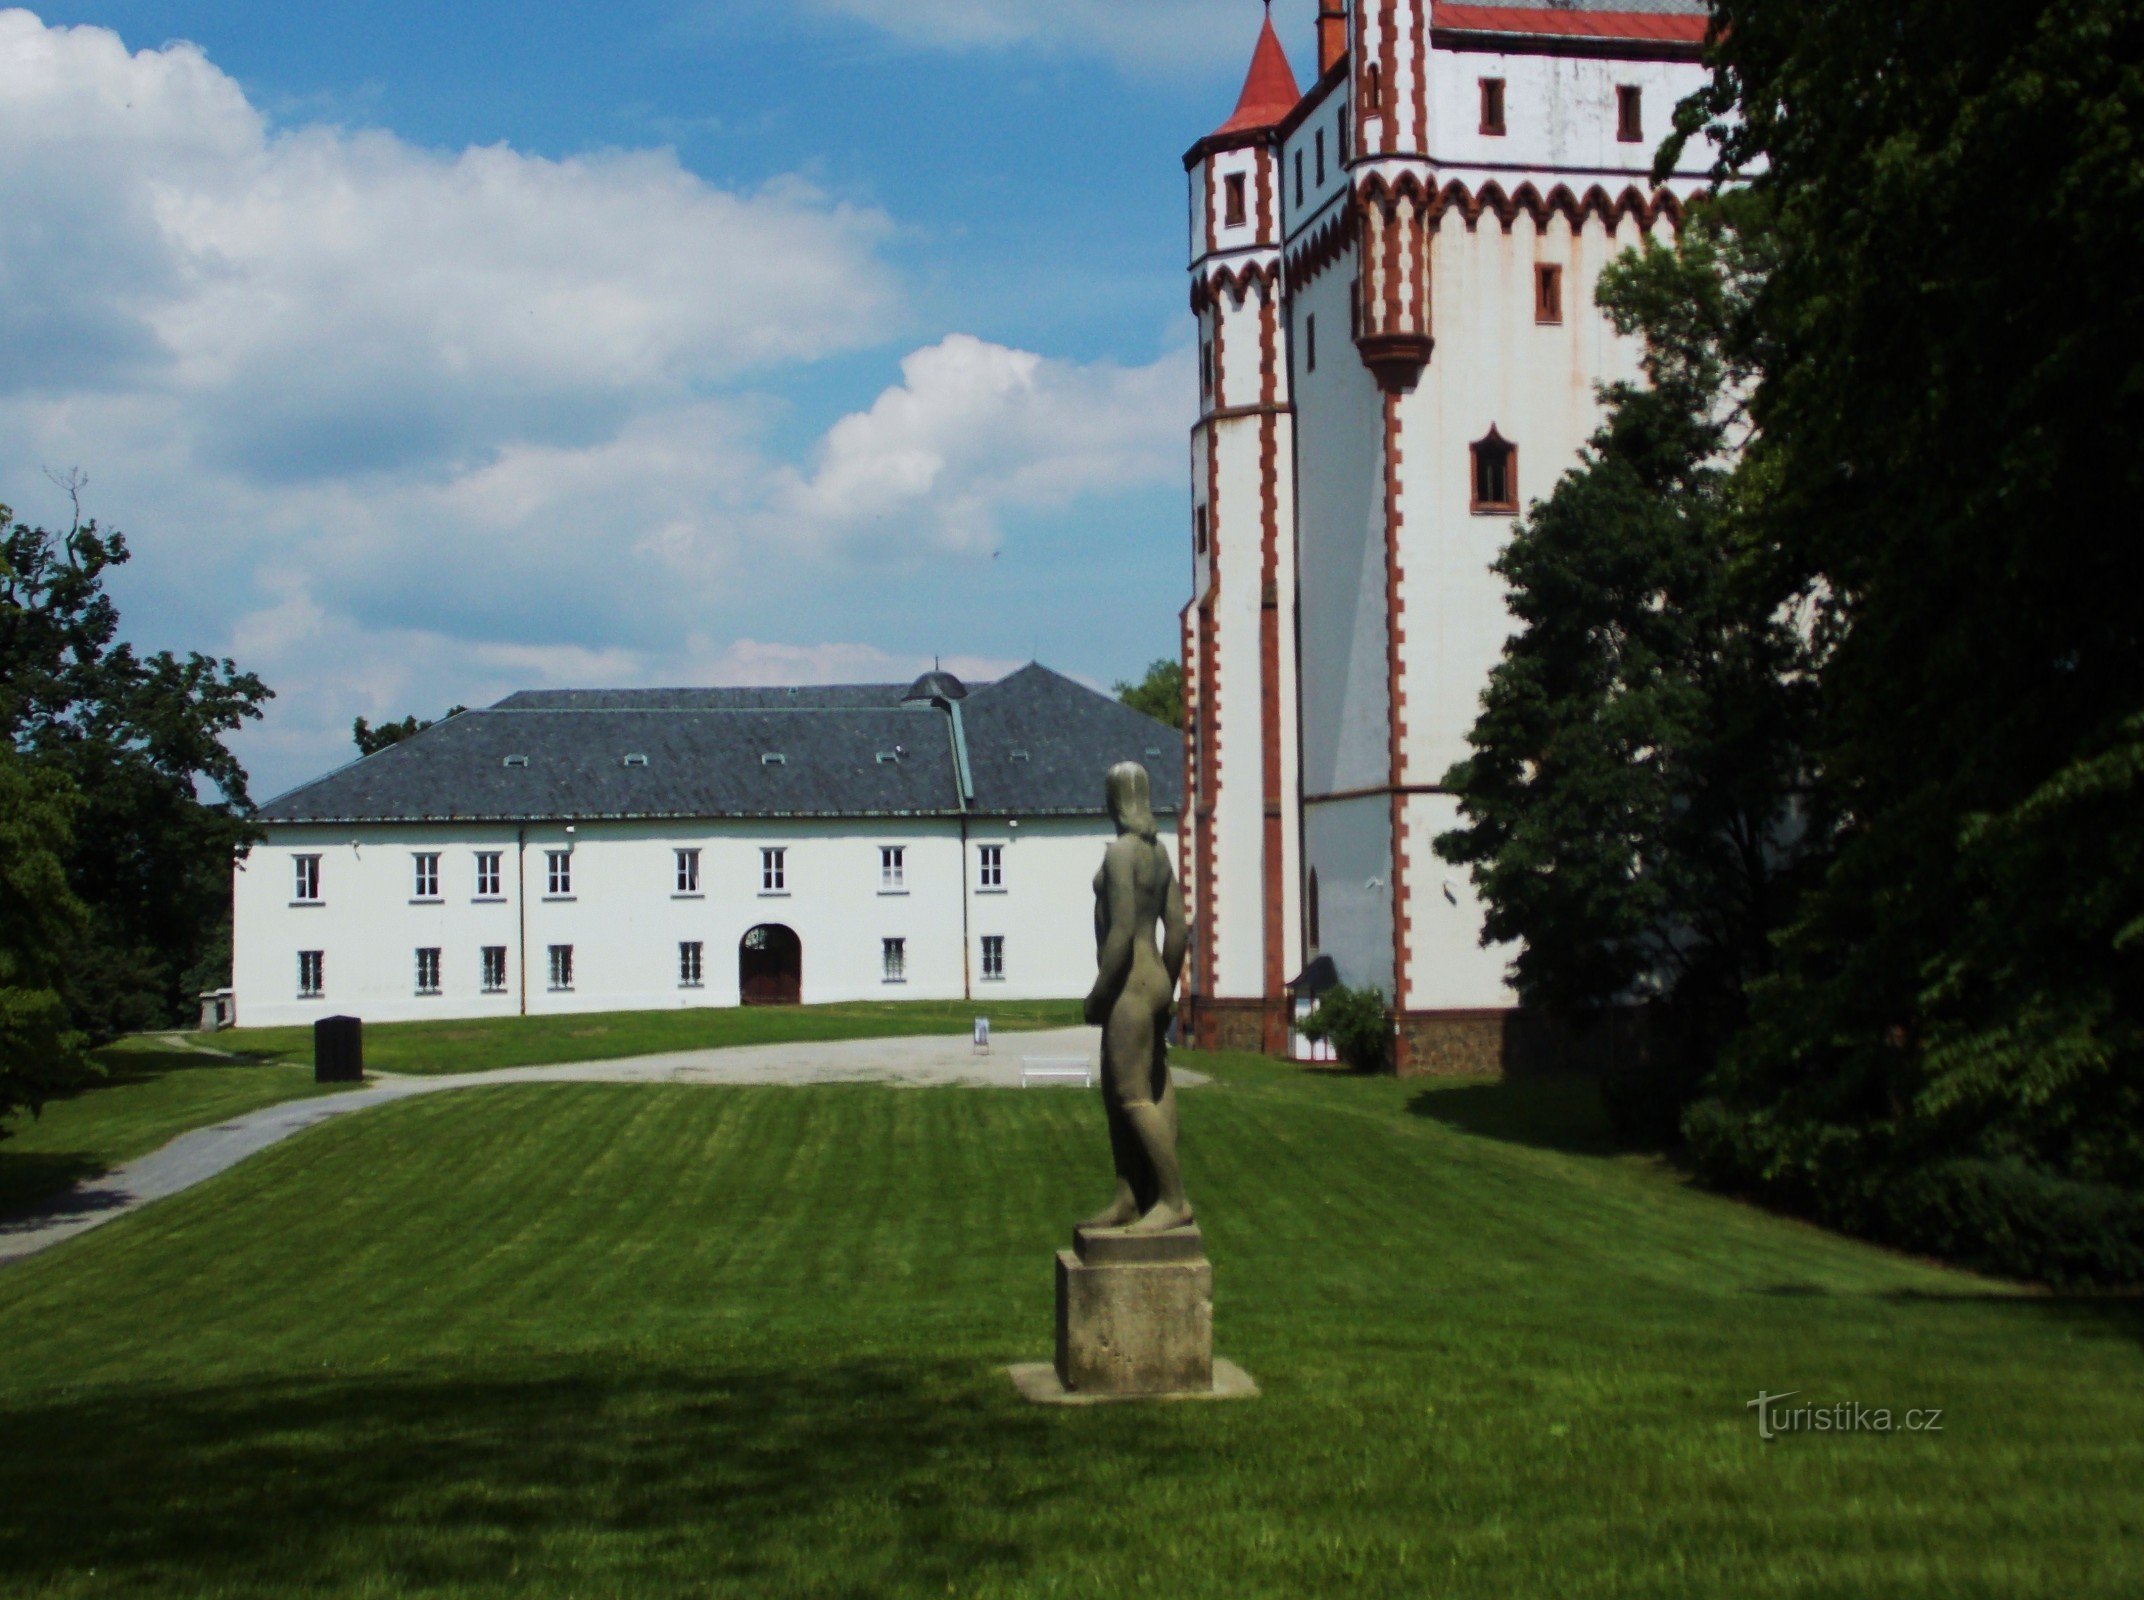 De witte watertoren in het kasteelpark in Hradec nad Moravicí